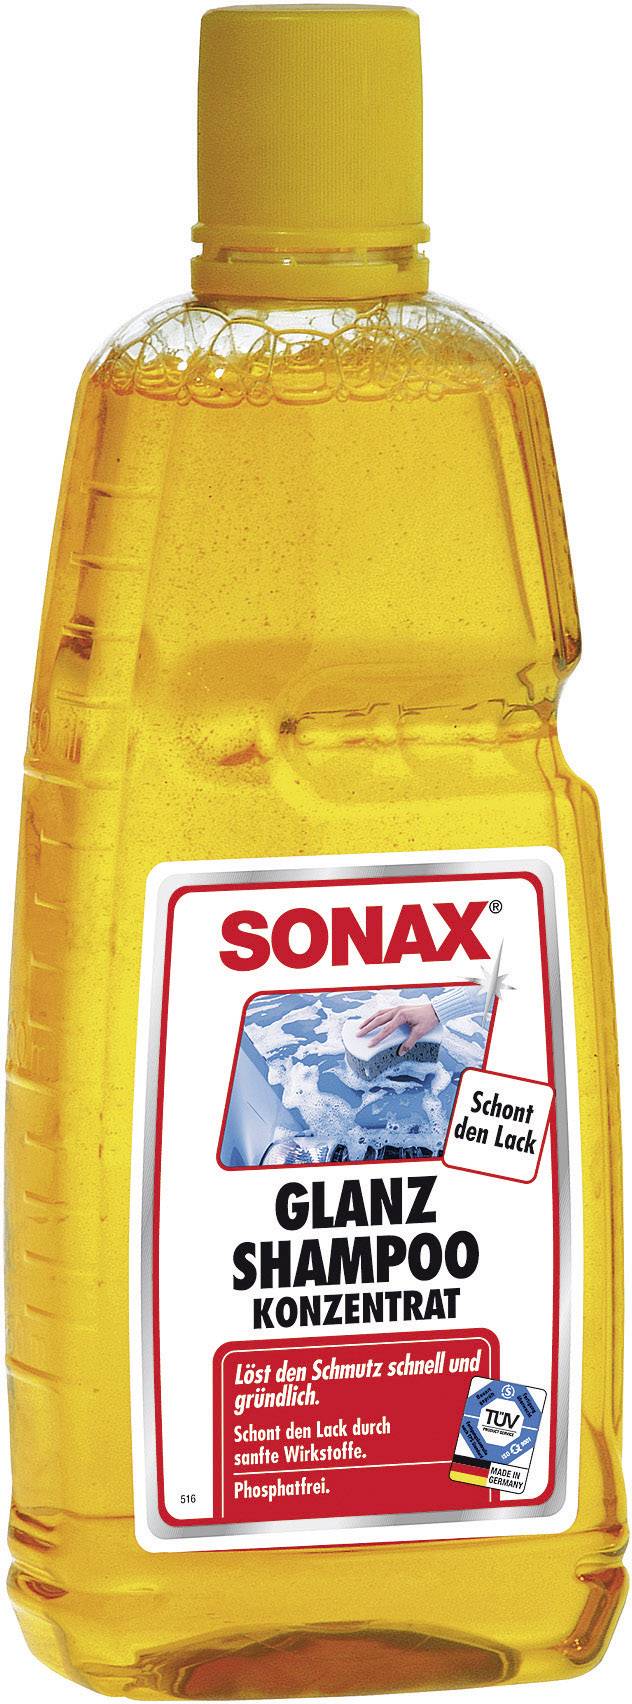 Sonax 314300 shampoo | Conrad.com